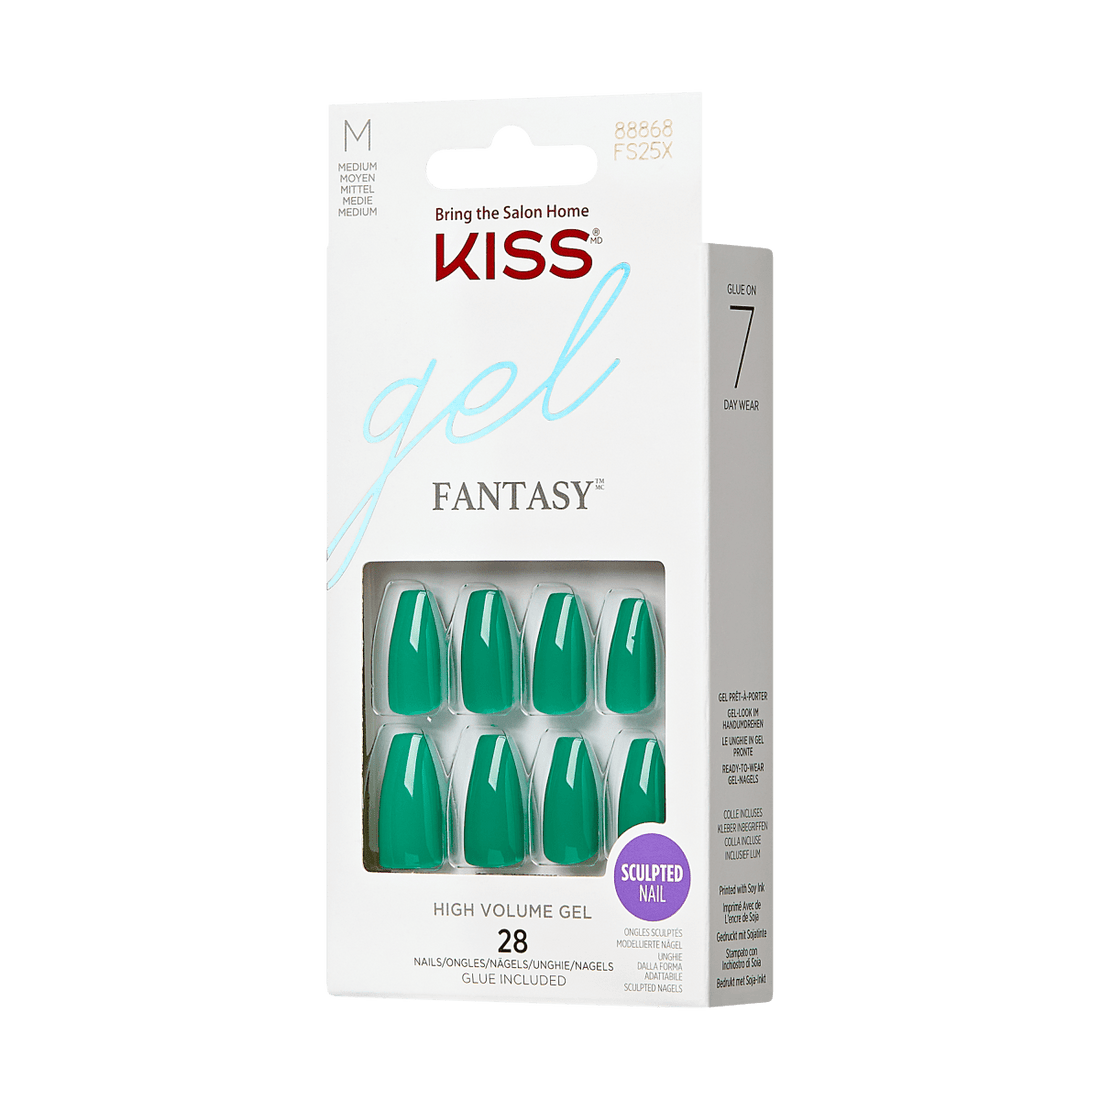 KISS Gel Fantasy, Press-On Nails, Blossom, Green, Med Coffin, 28ct